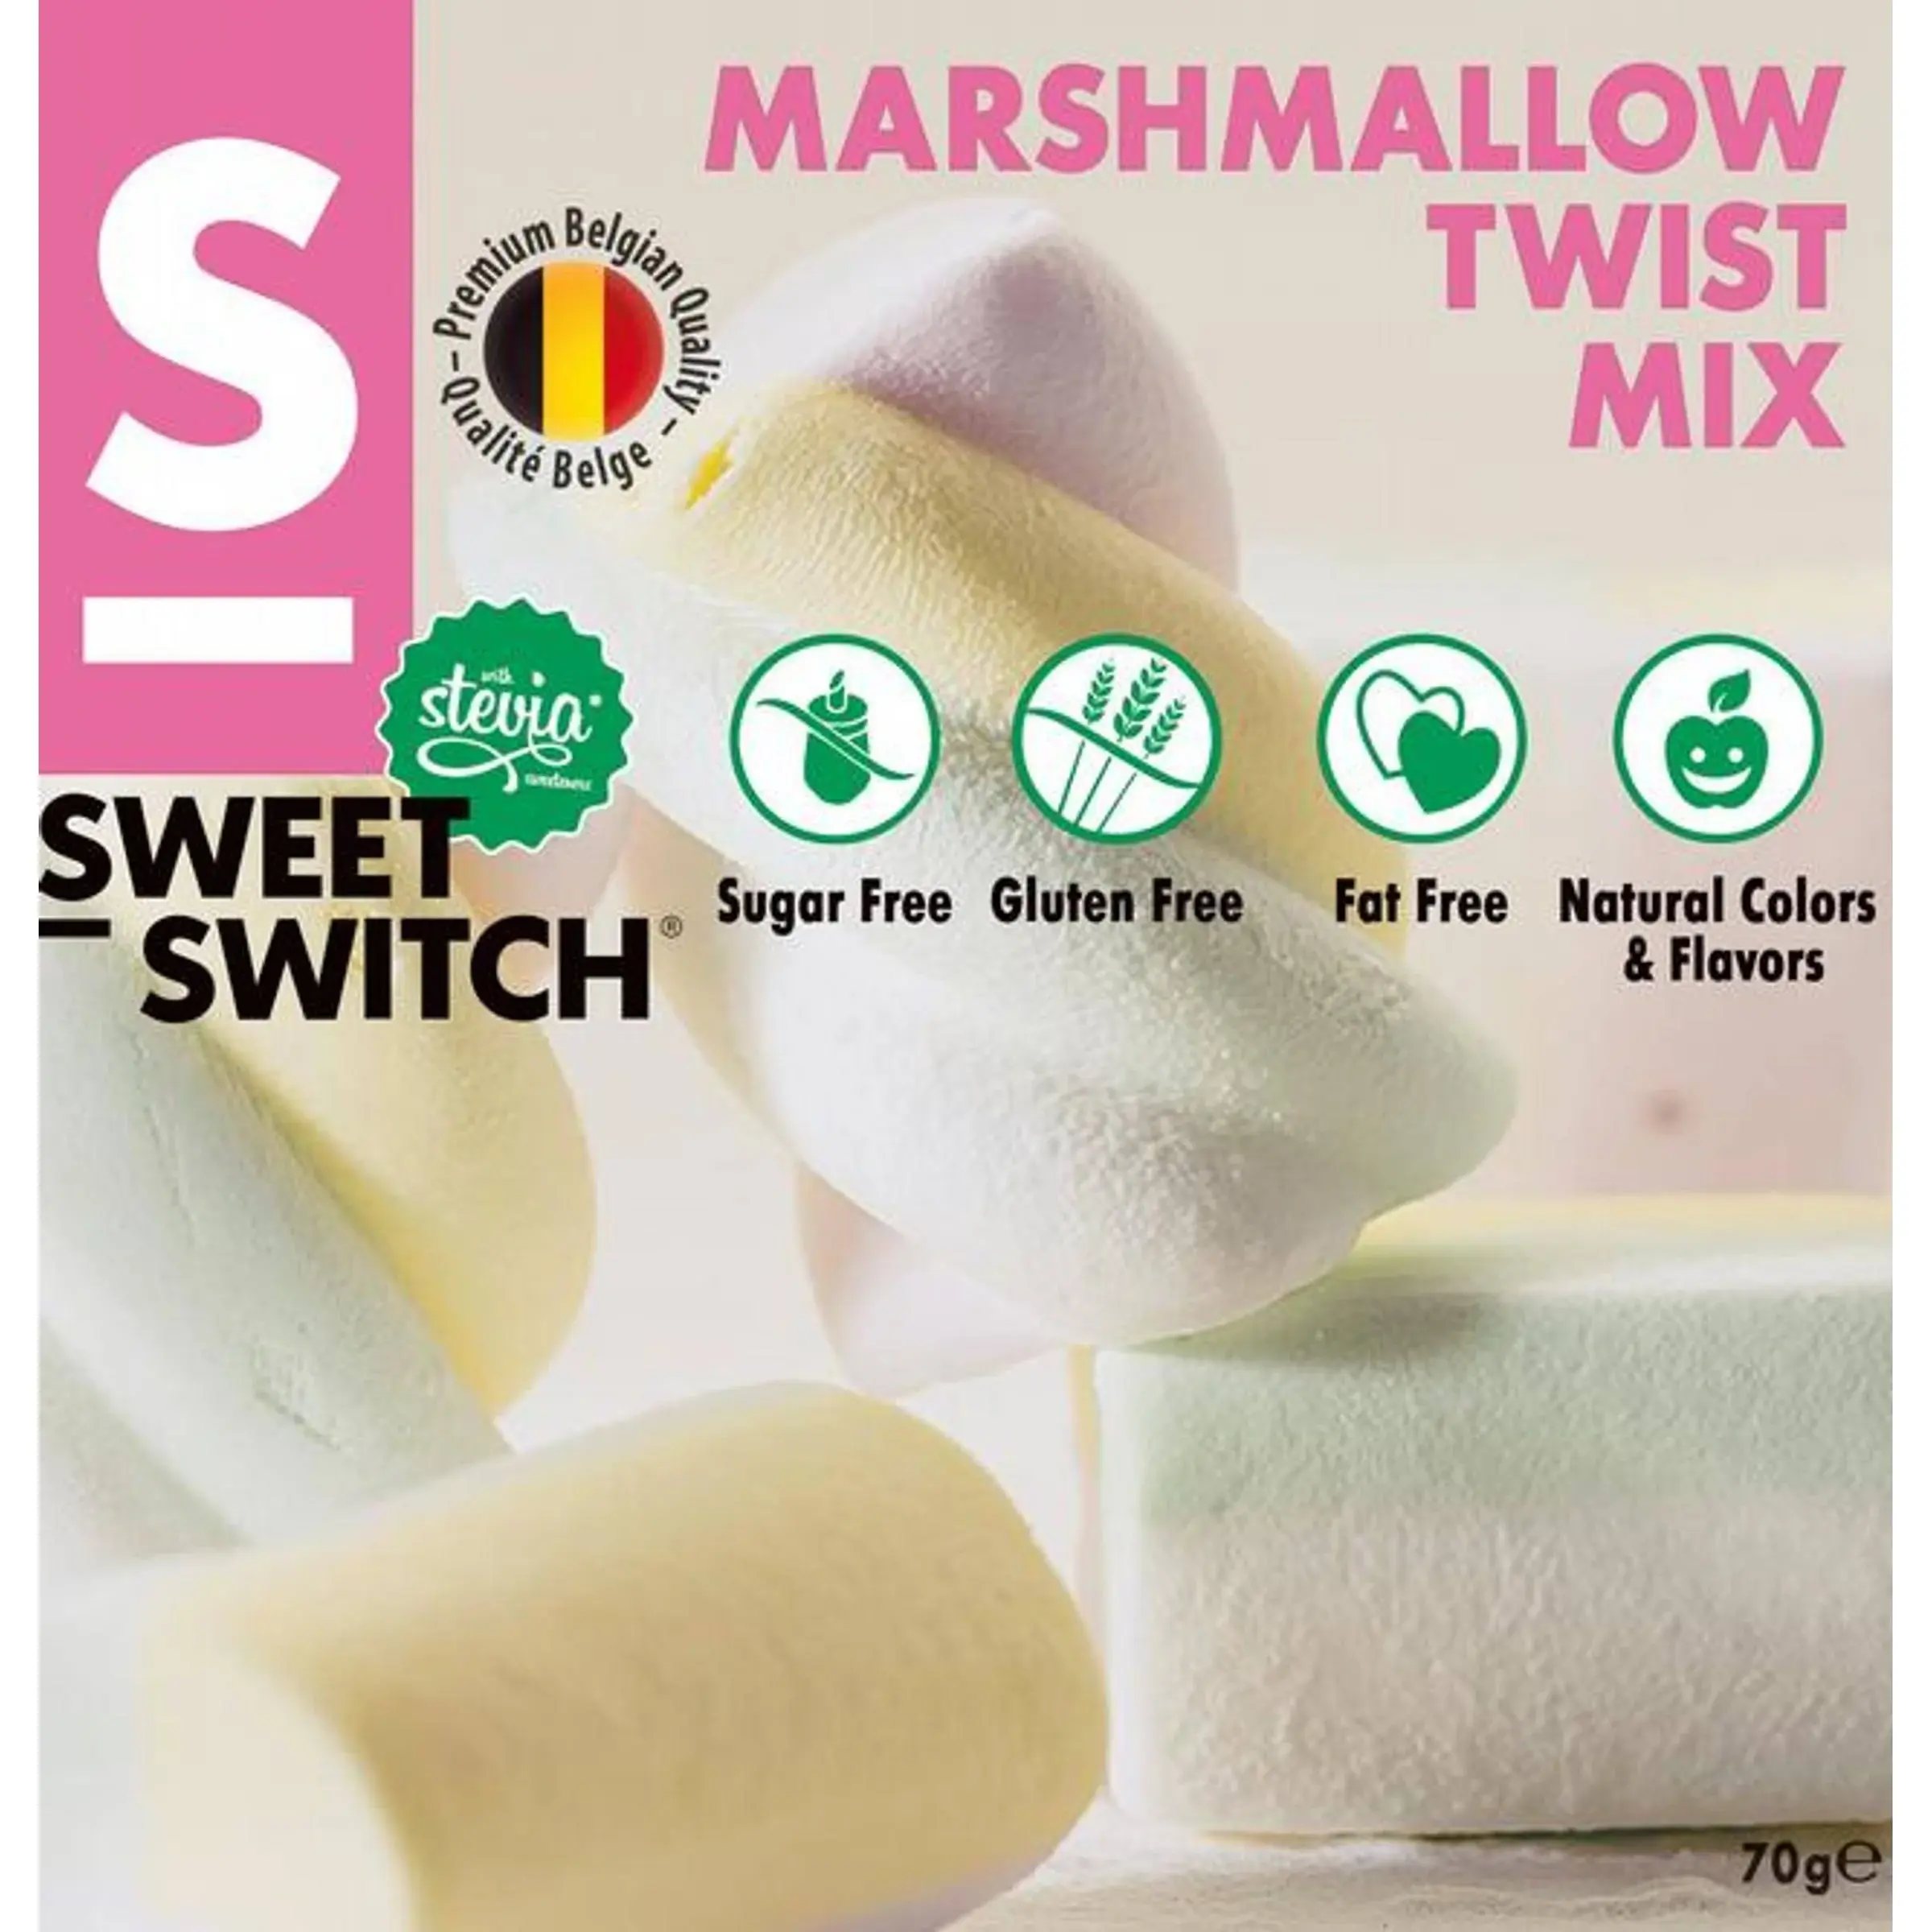 Sweet-Switch Marshmallow Mix